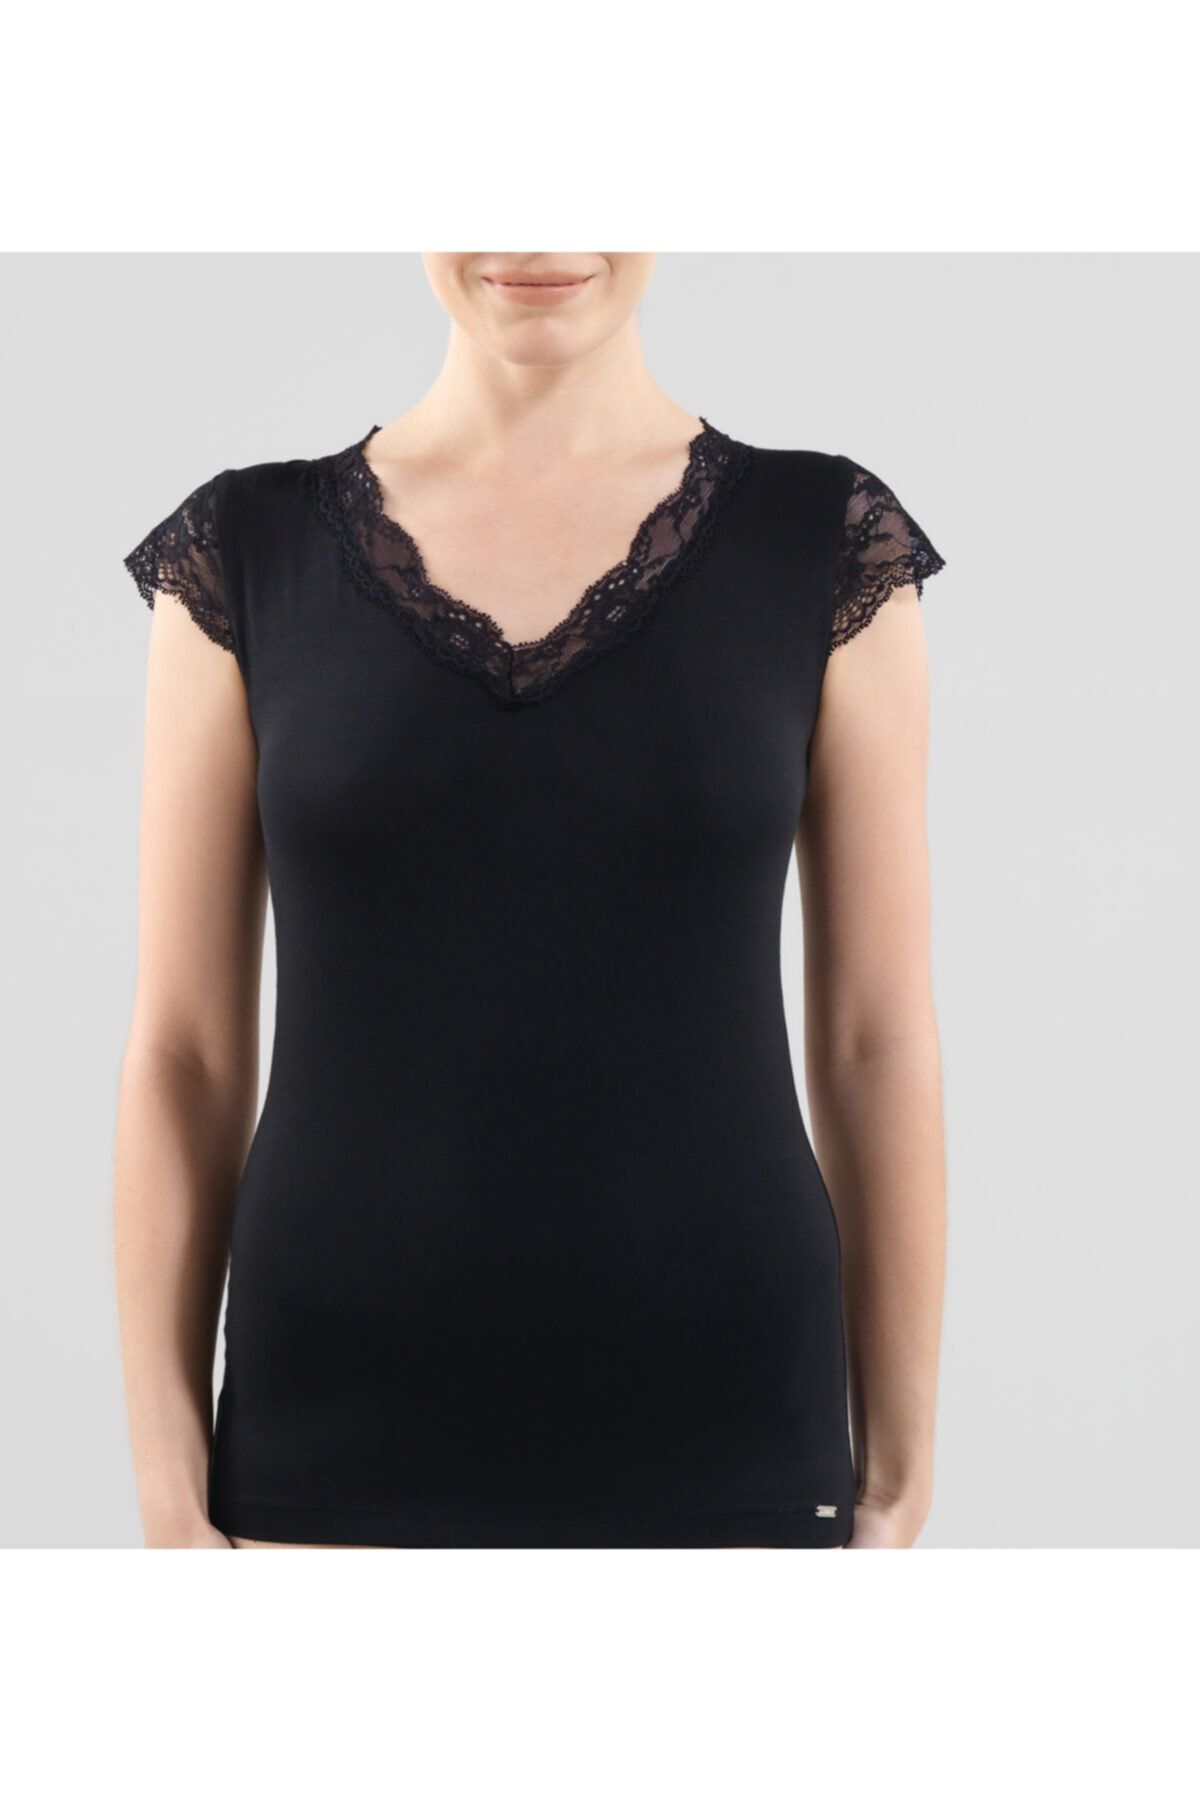 Blackspade Kadın T-shirt 1348 - Siyah